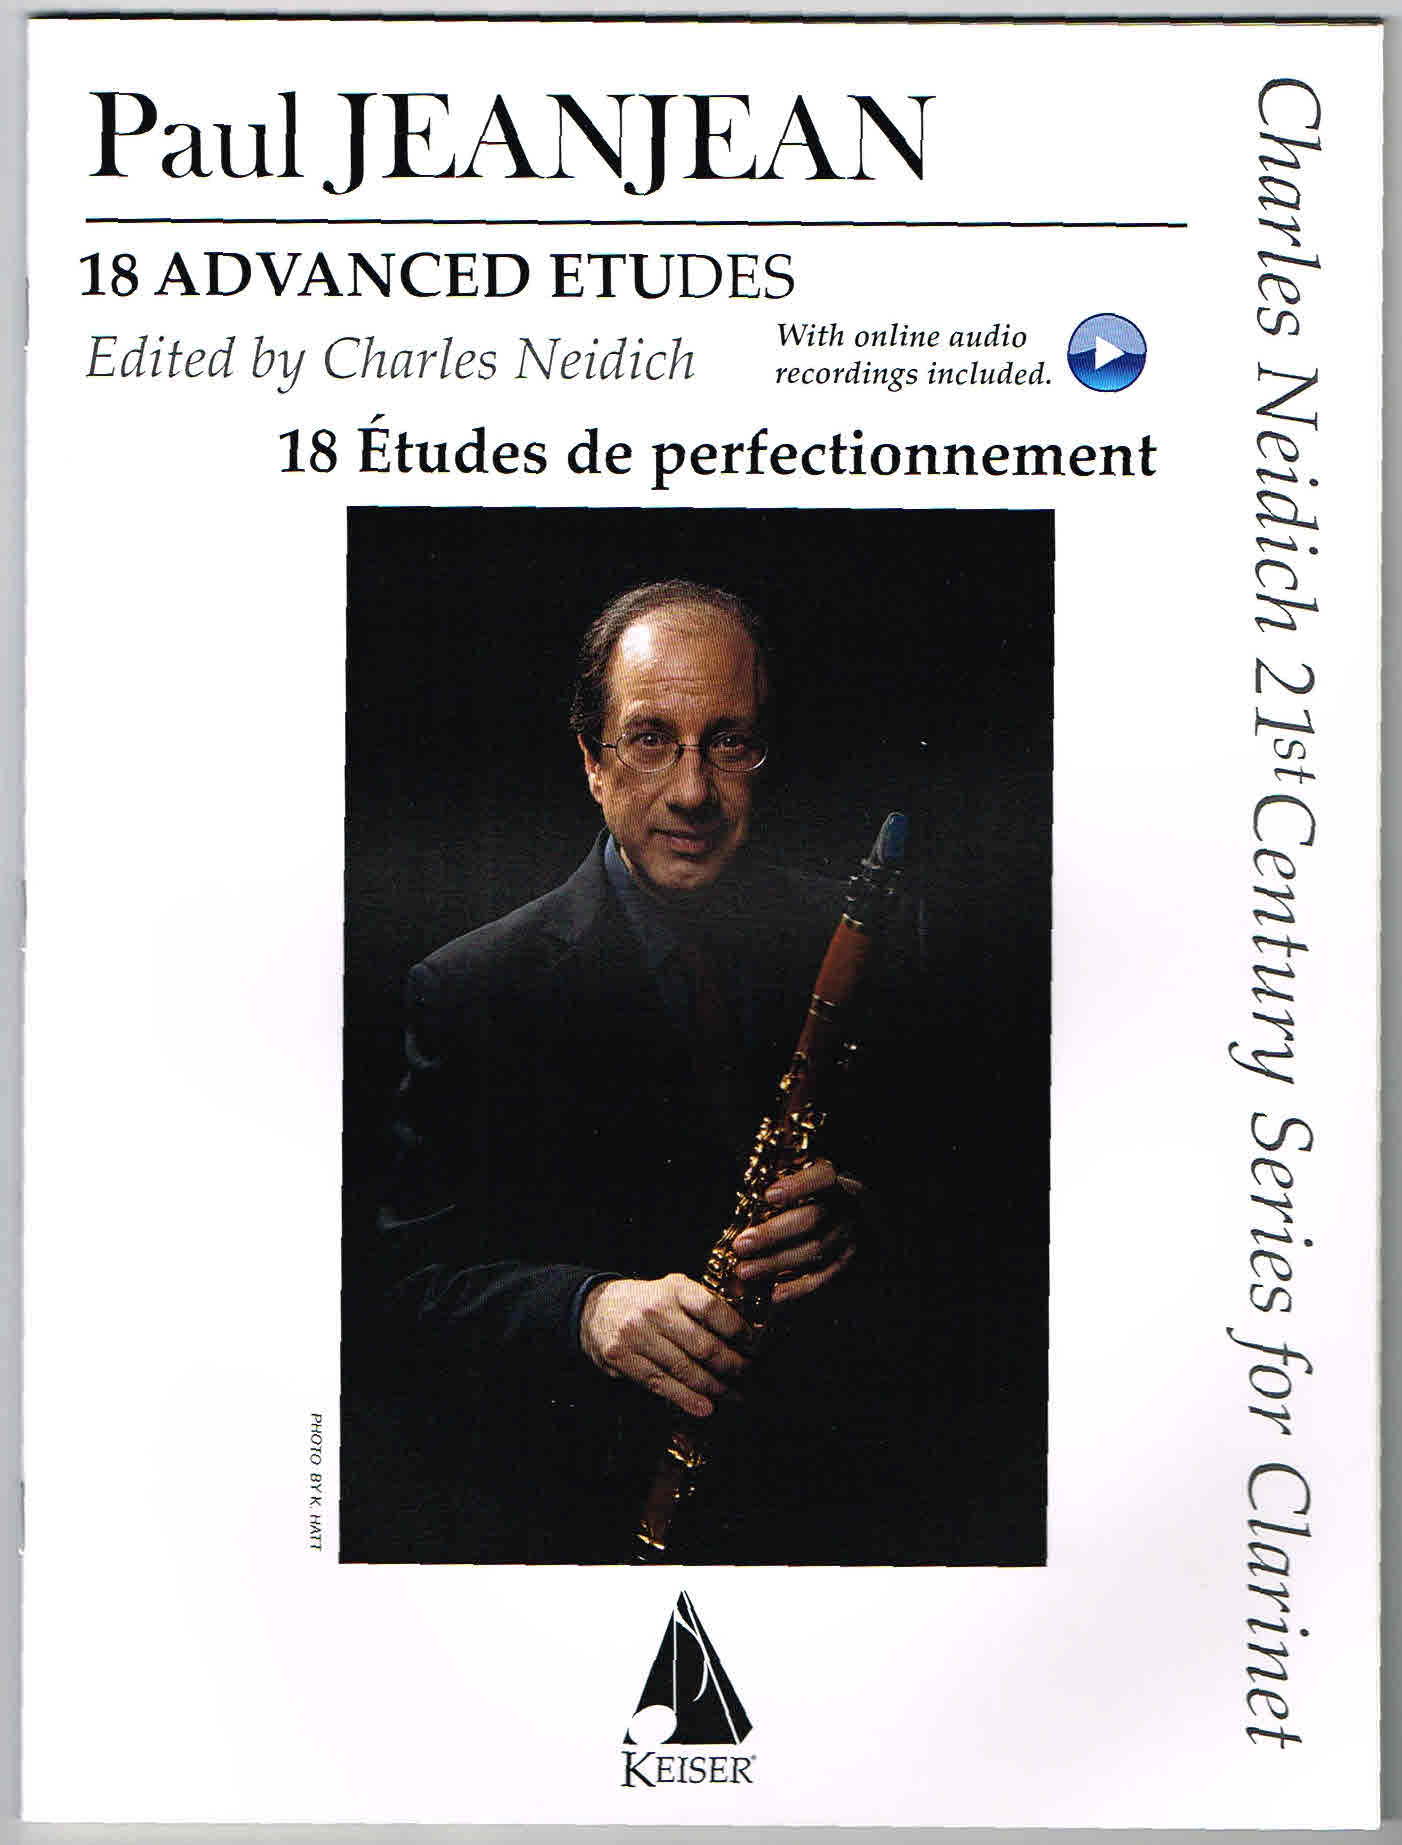 Paul Jean Jean - 18 Advanced Etudes for Clarinet by Charles Neidich (HL00042385) - Afbeelding 1 van 1